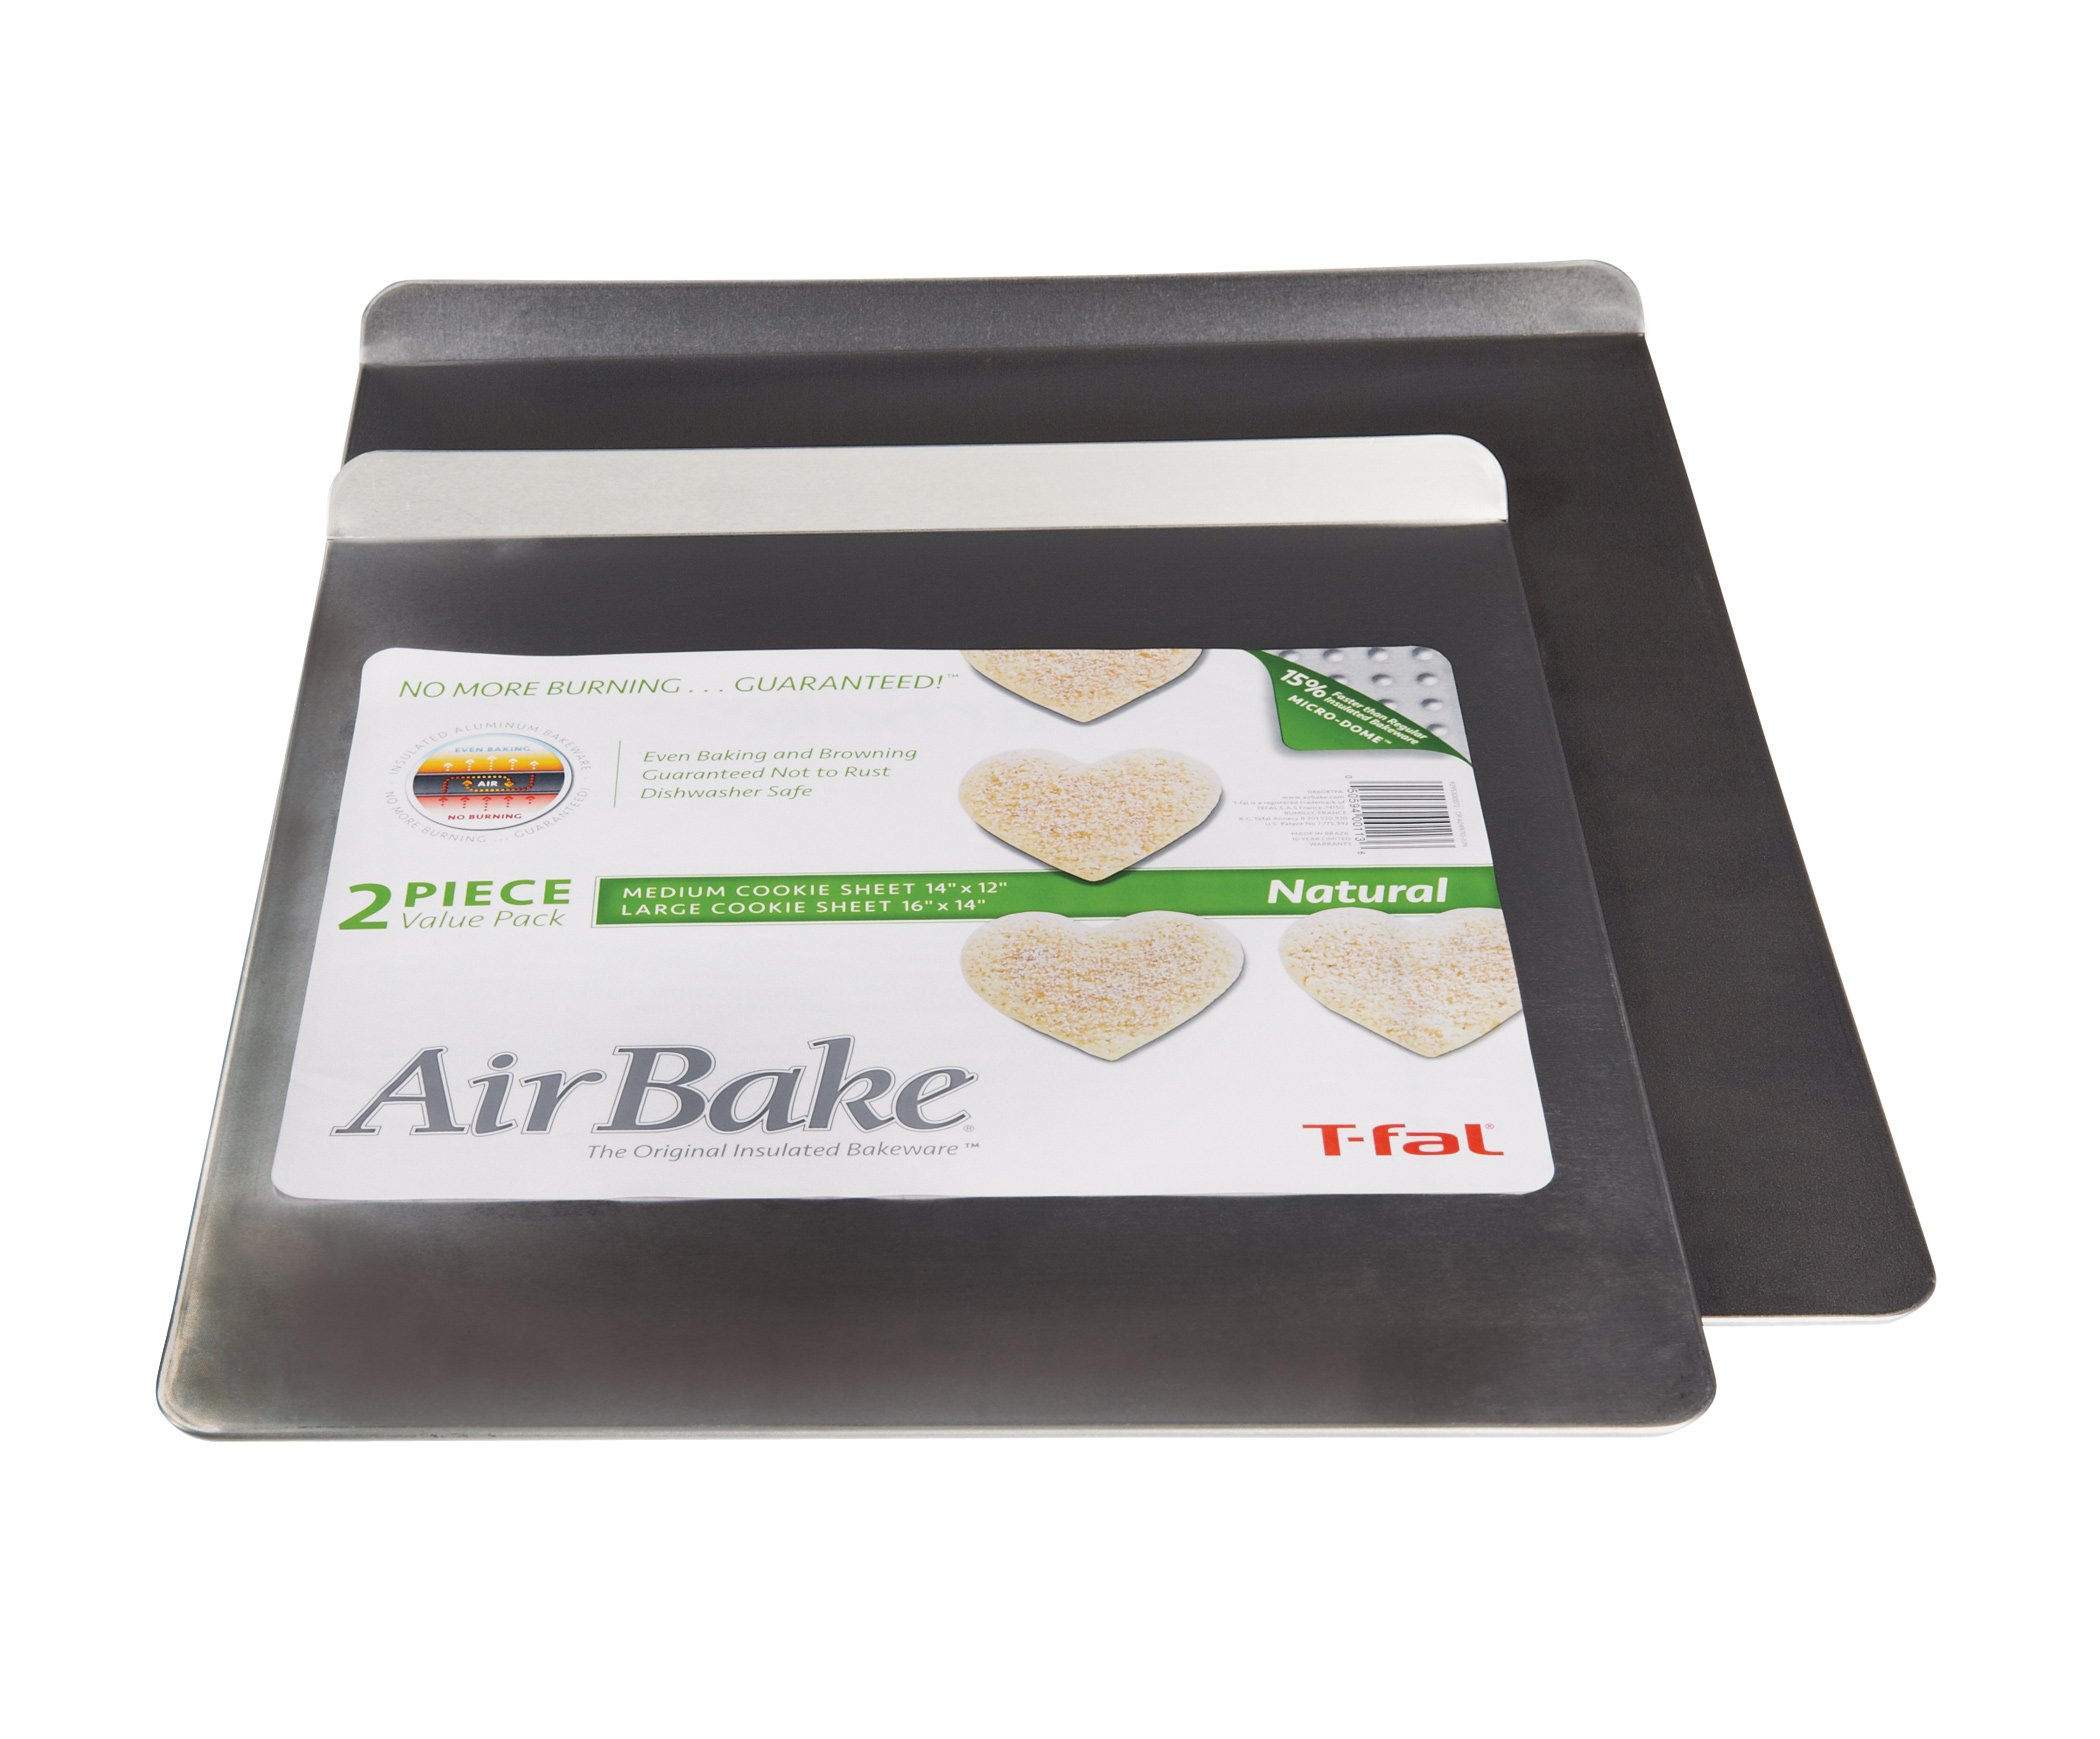 T-fal Airbake Cookie Sheet Large 2 ct